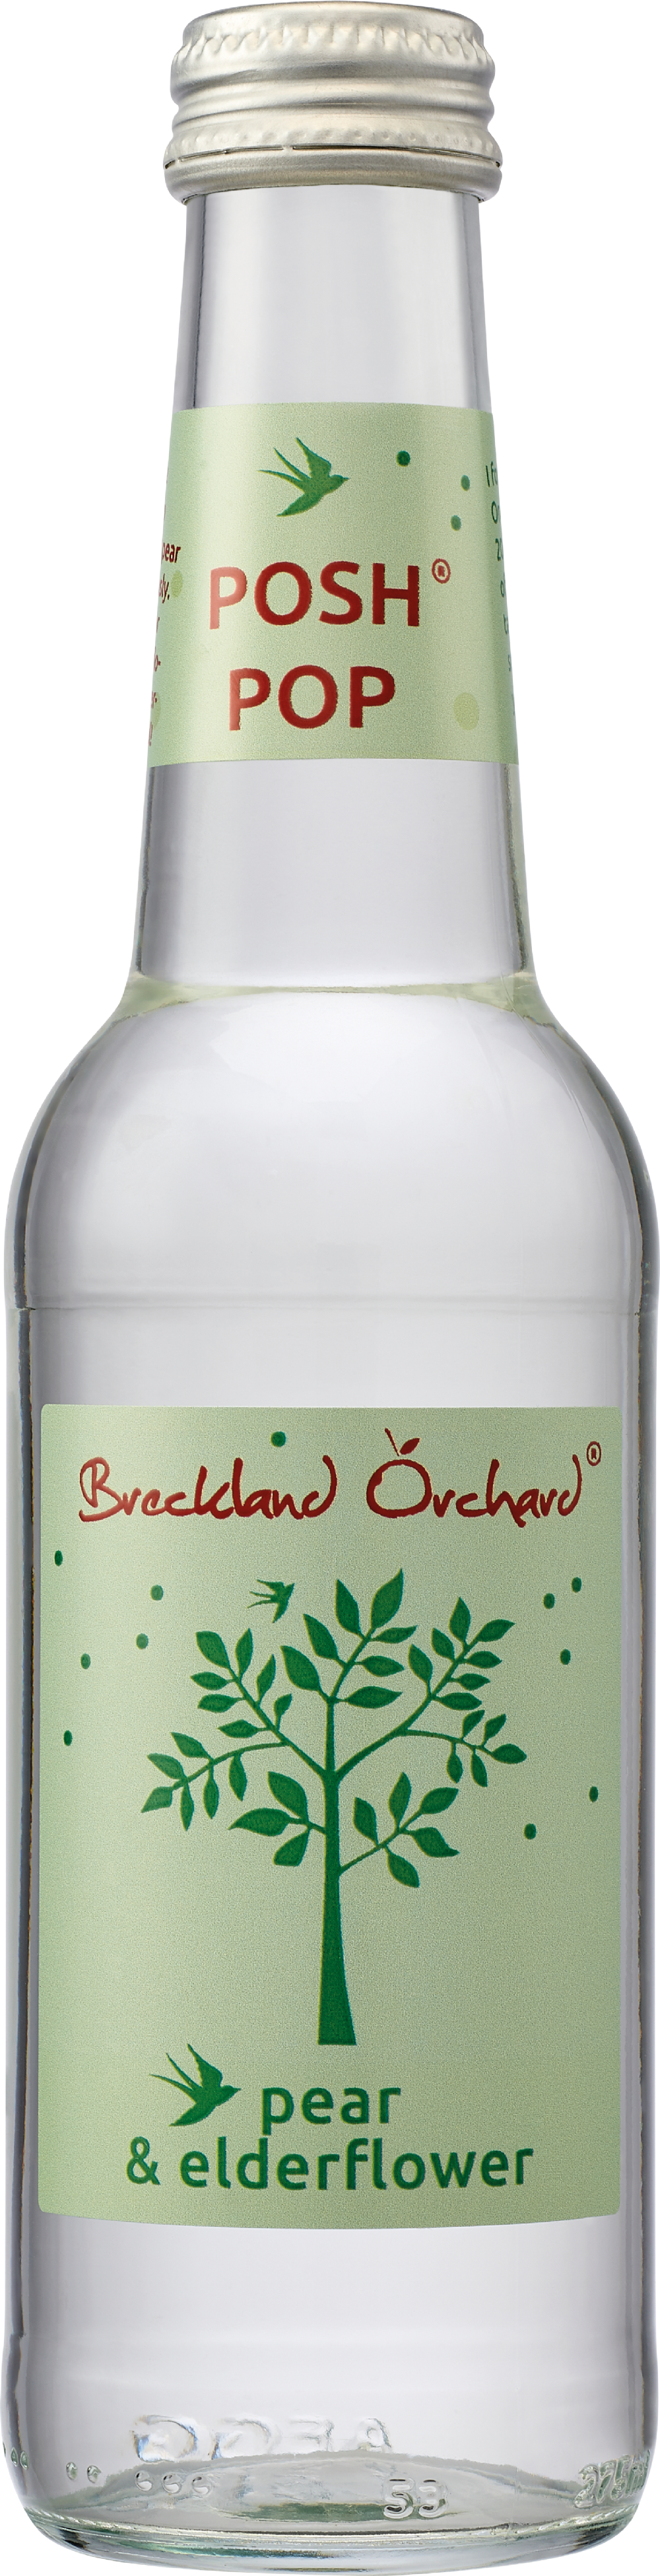 BRECKLAND ORCHARD Posh Pop - Pear & Elderflower 275ml